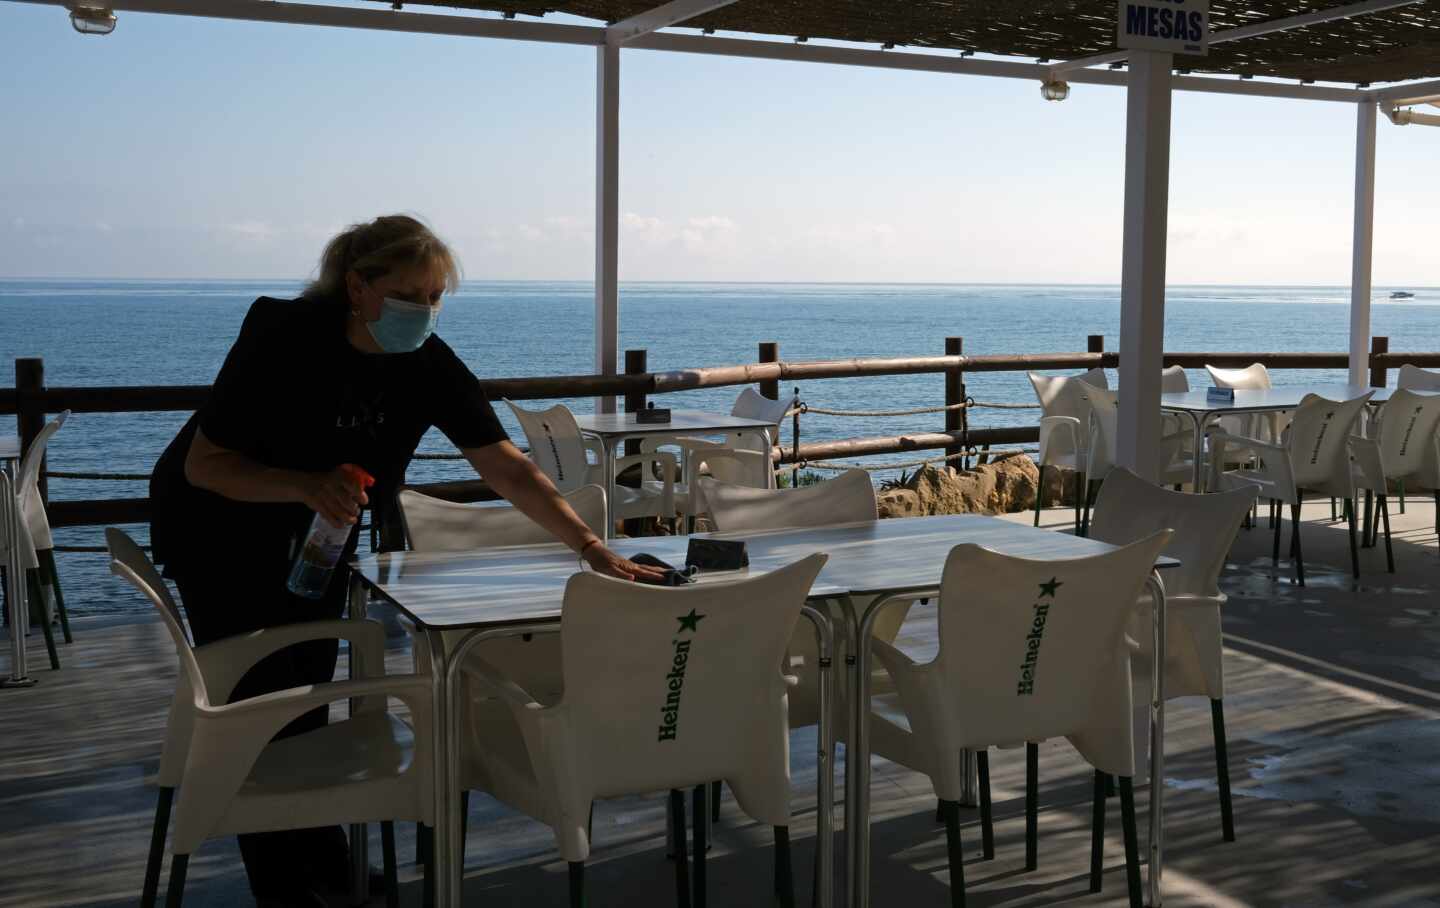 Mallorca podrá abrir interiores de bares y restaurantes a un 30% de aforo a partir del lunes